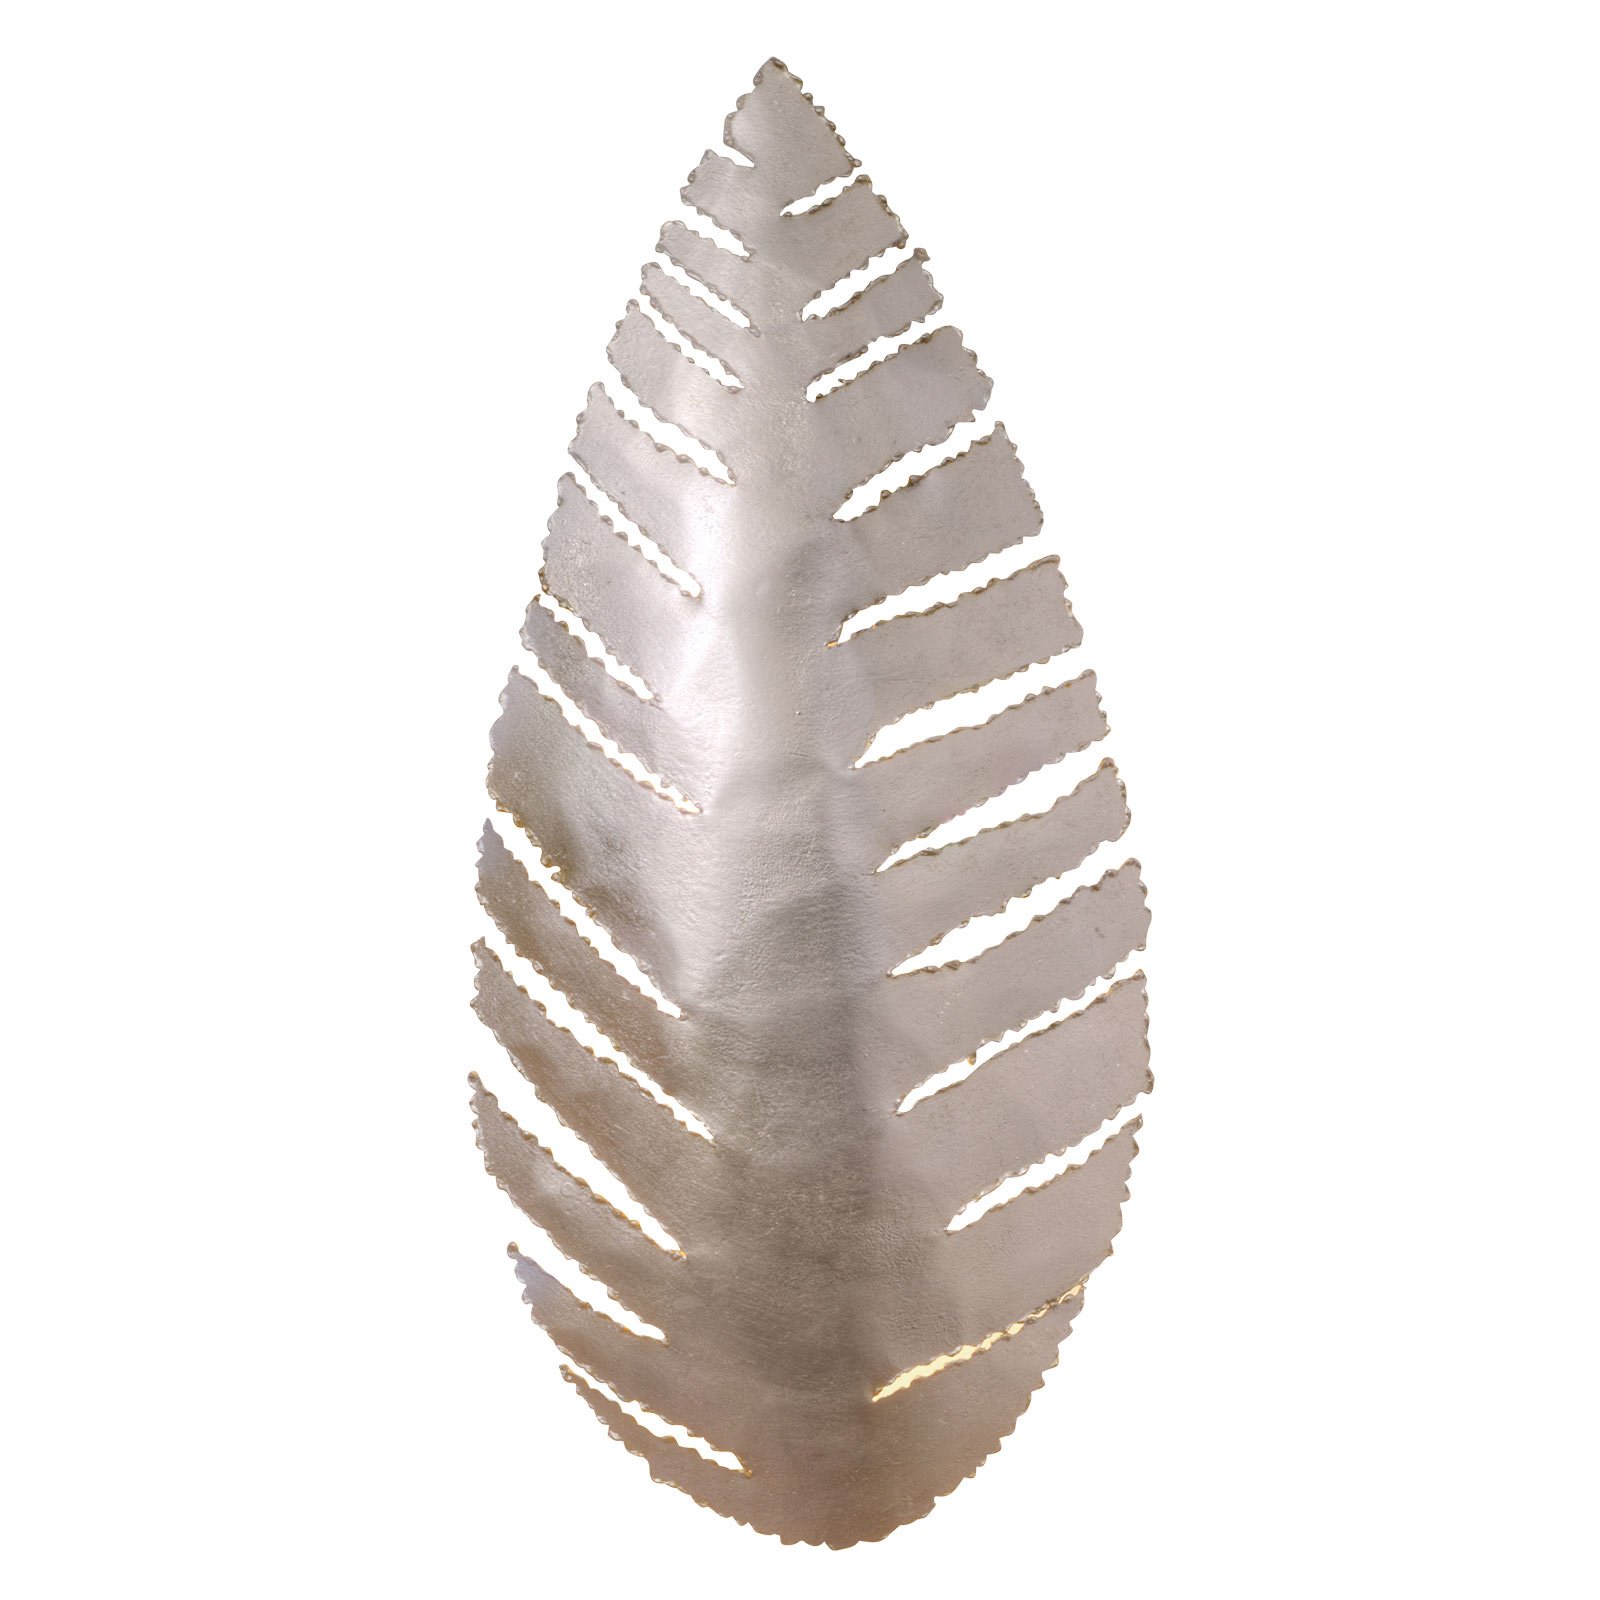 Pietro wall light in leaf shape, silver